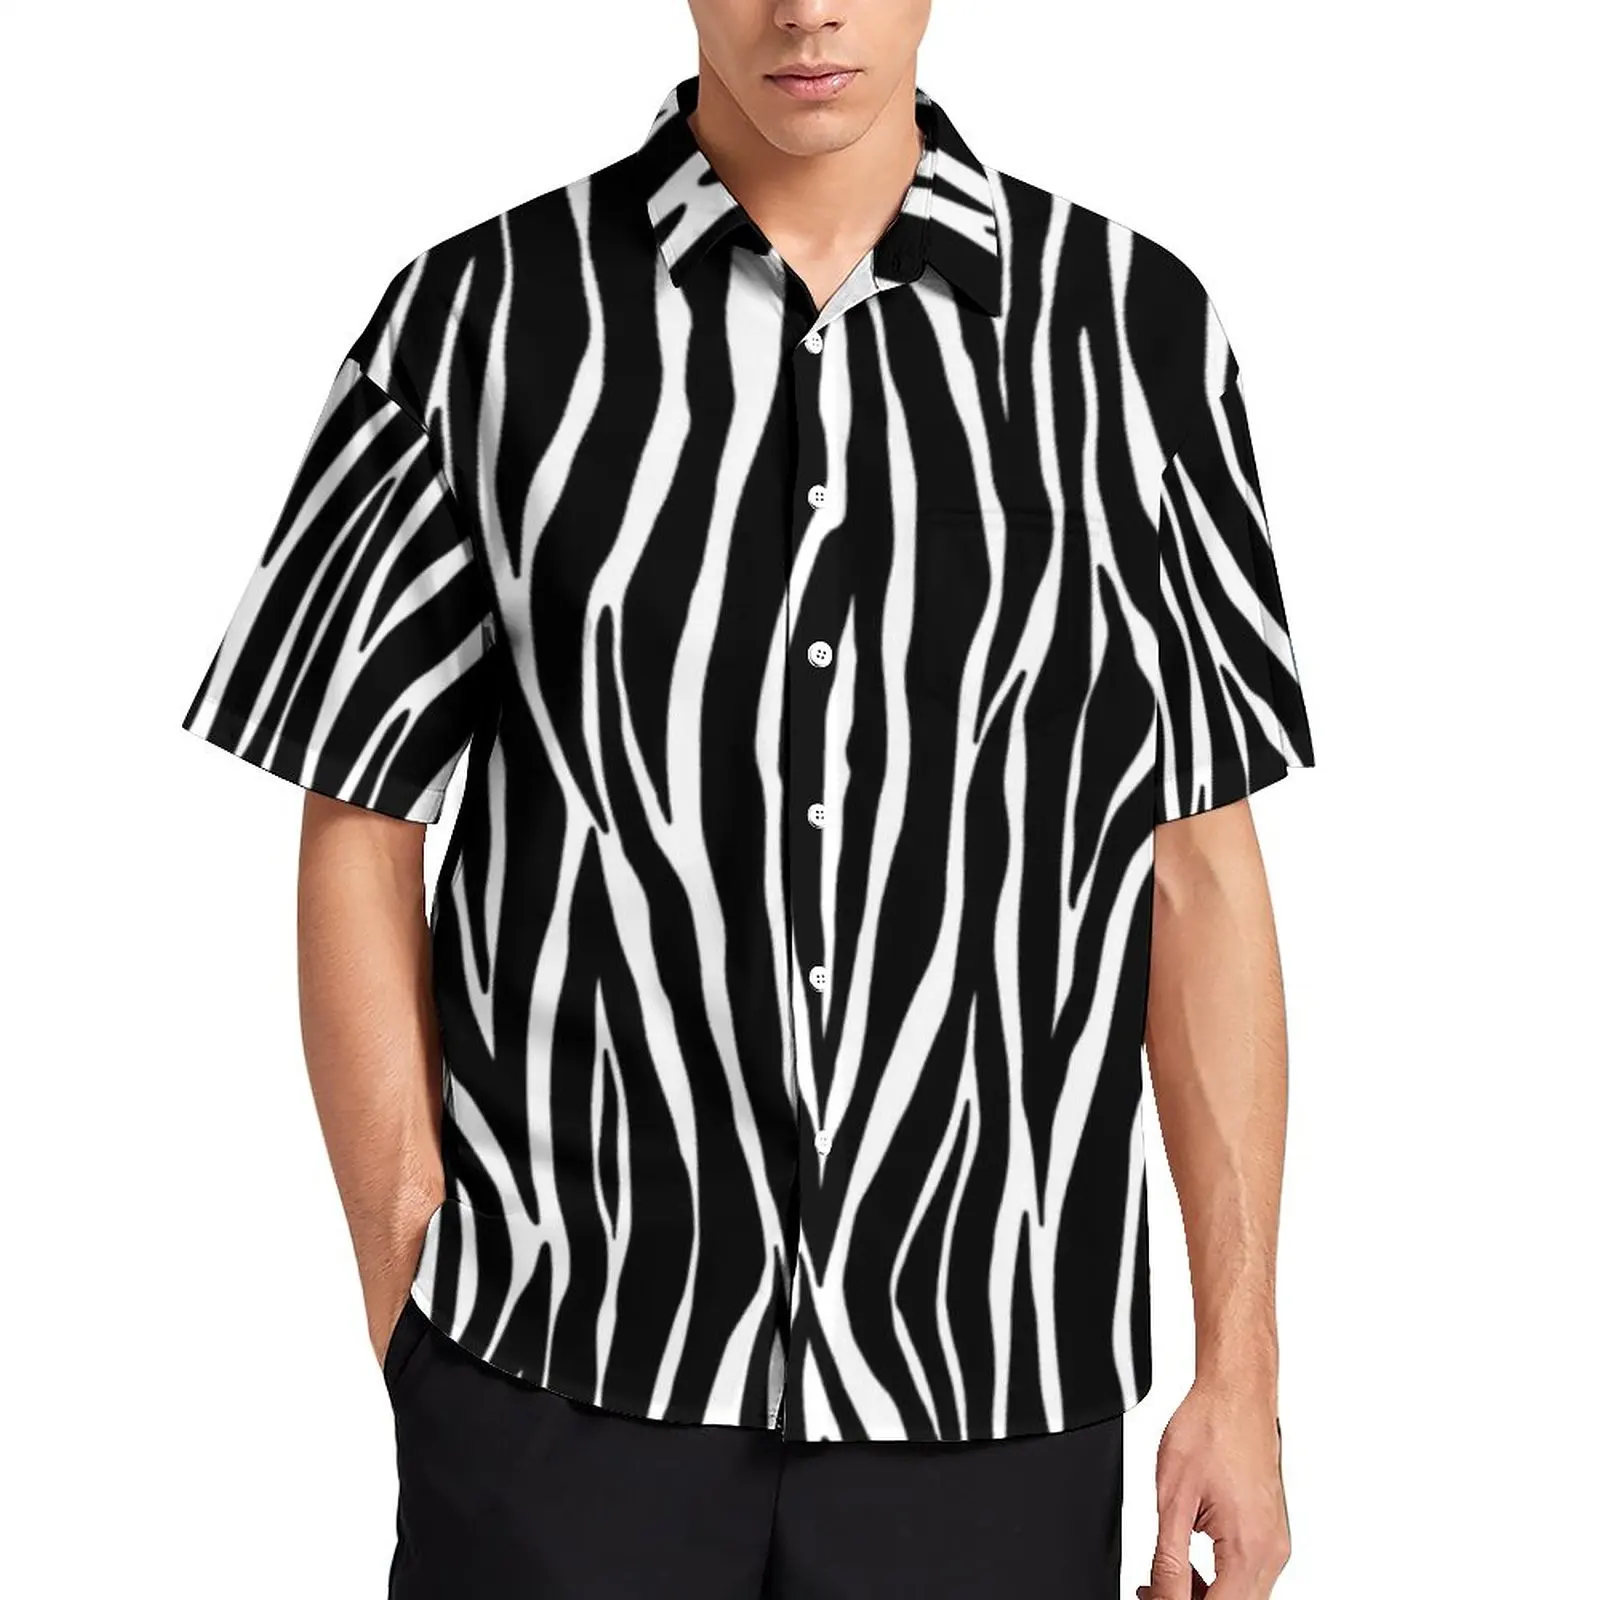 

Zebra Print Loose Shirt Men Beach Black And White Stripes Casual Shirts Hawaiian Graphic Short-Sleeve Fashion Oversized Blouses